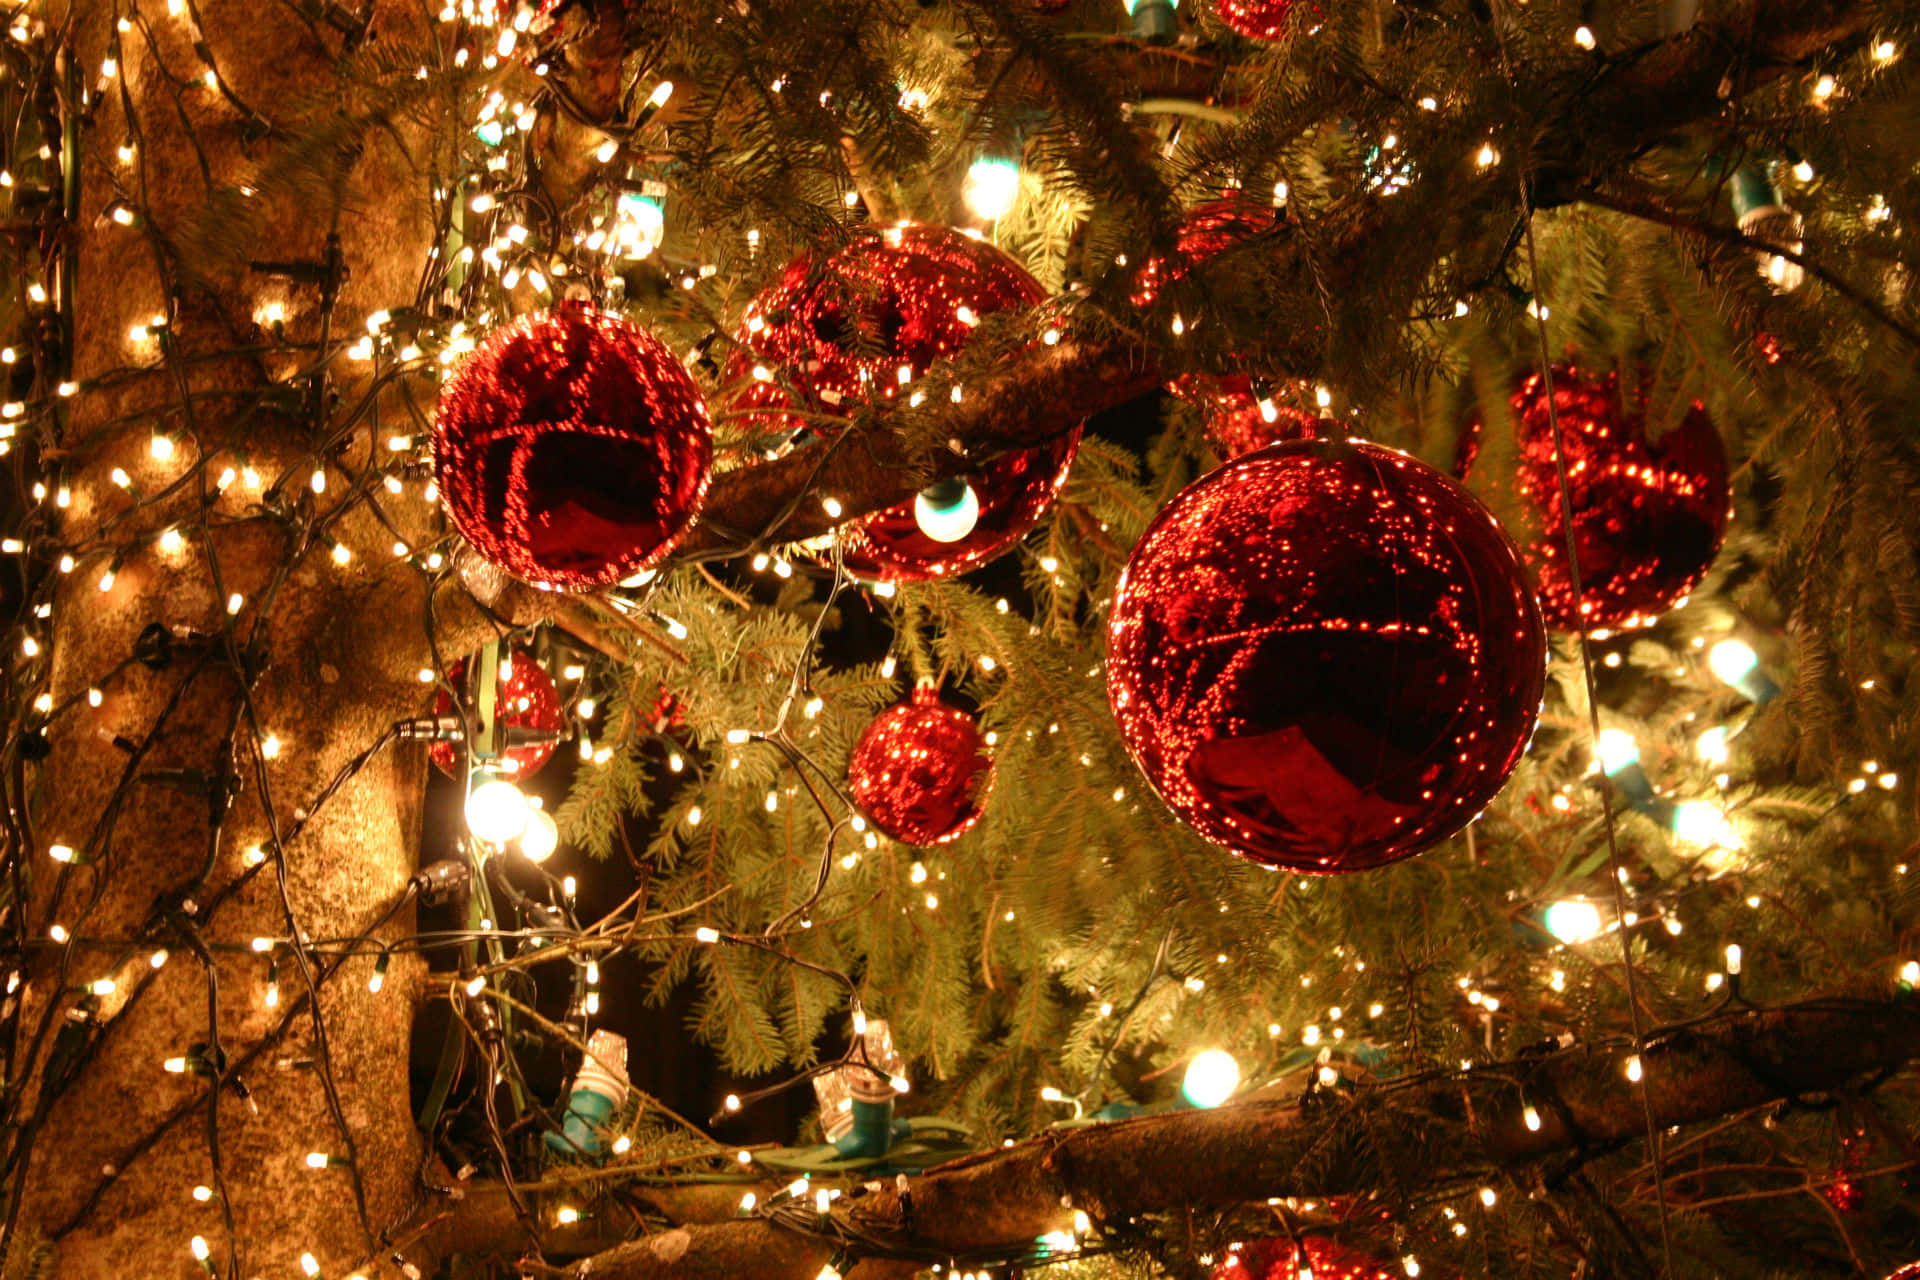 Festive Christmas Tree Decoration Wallpaper